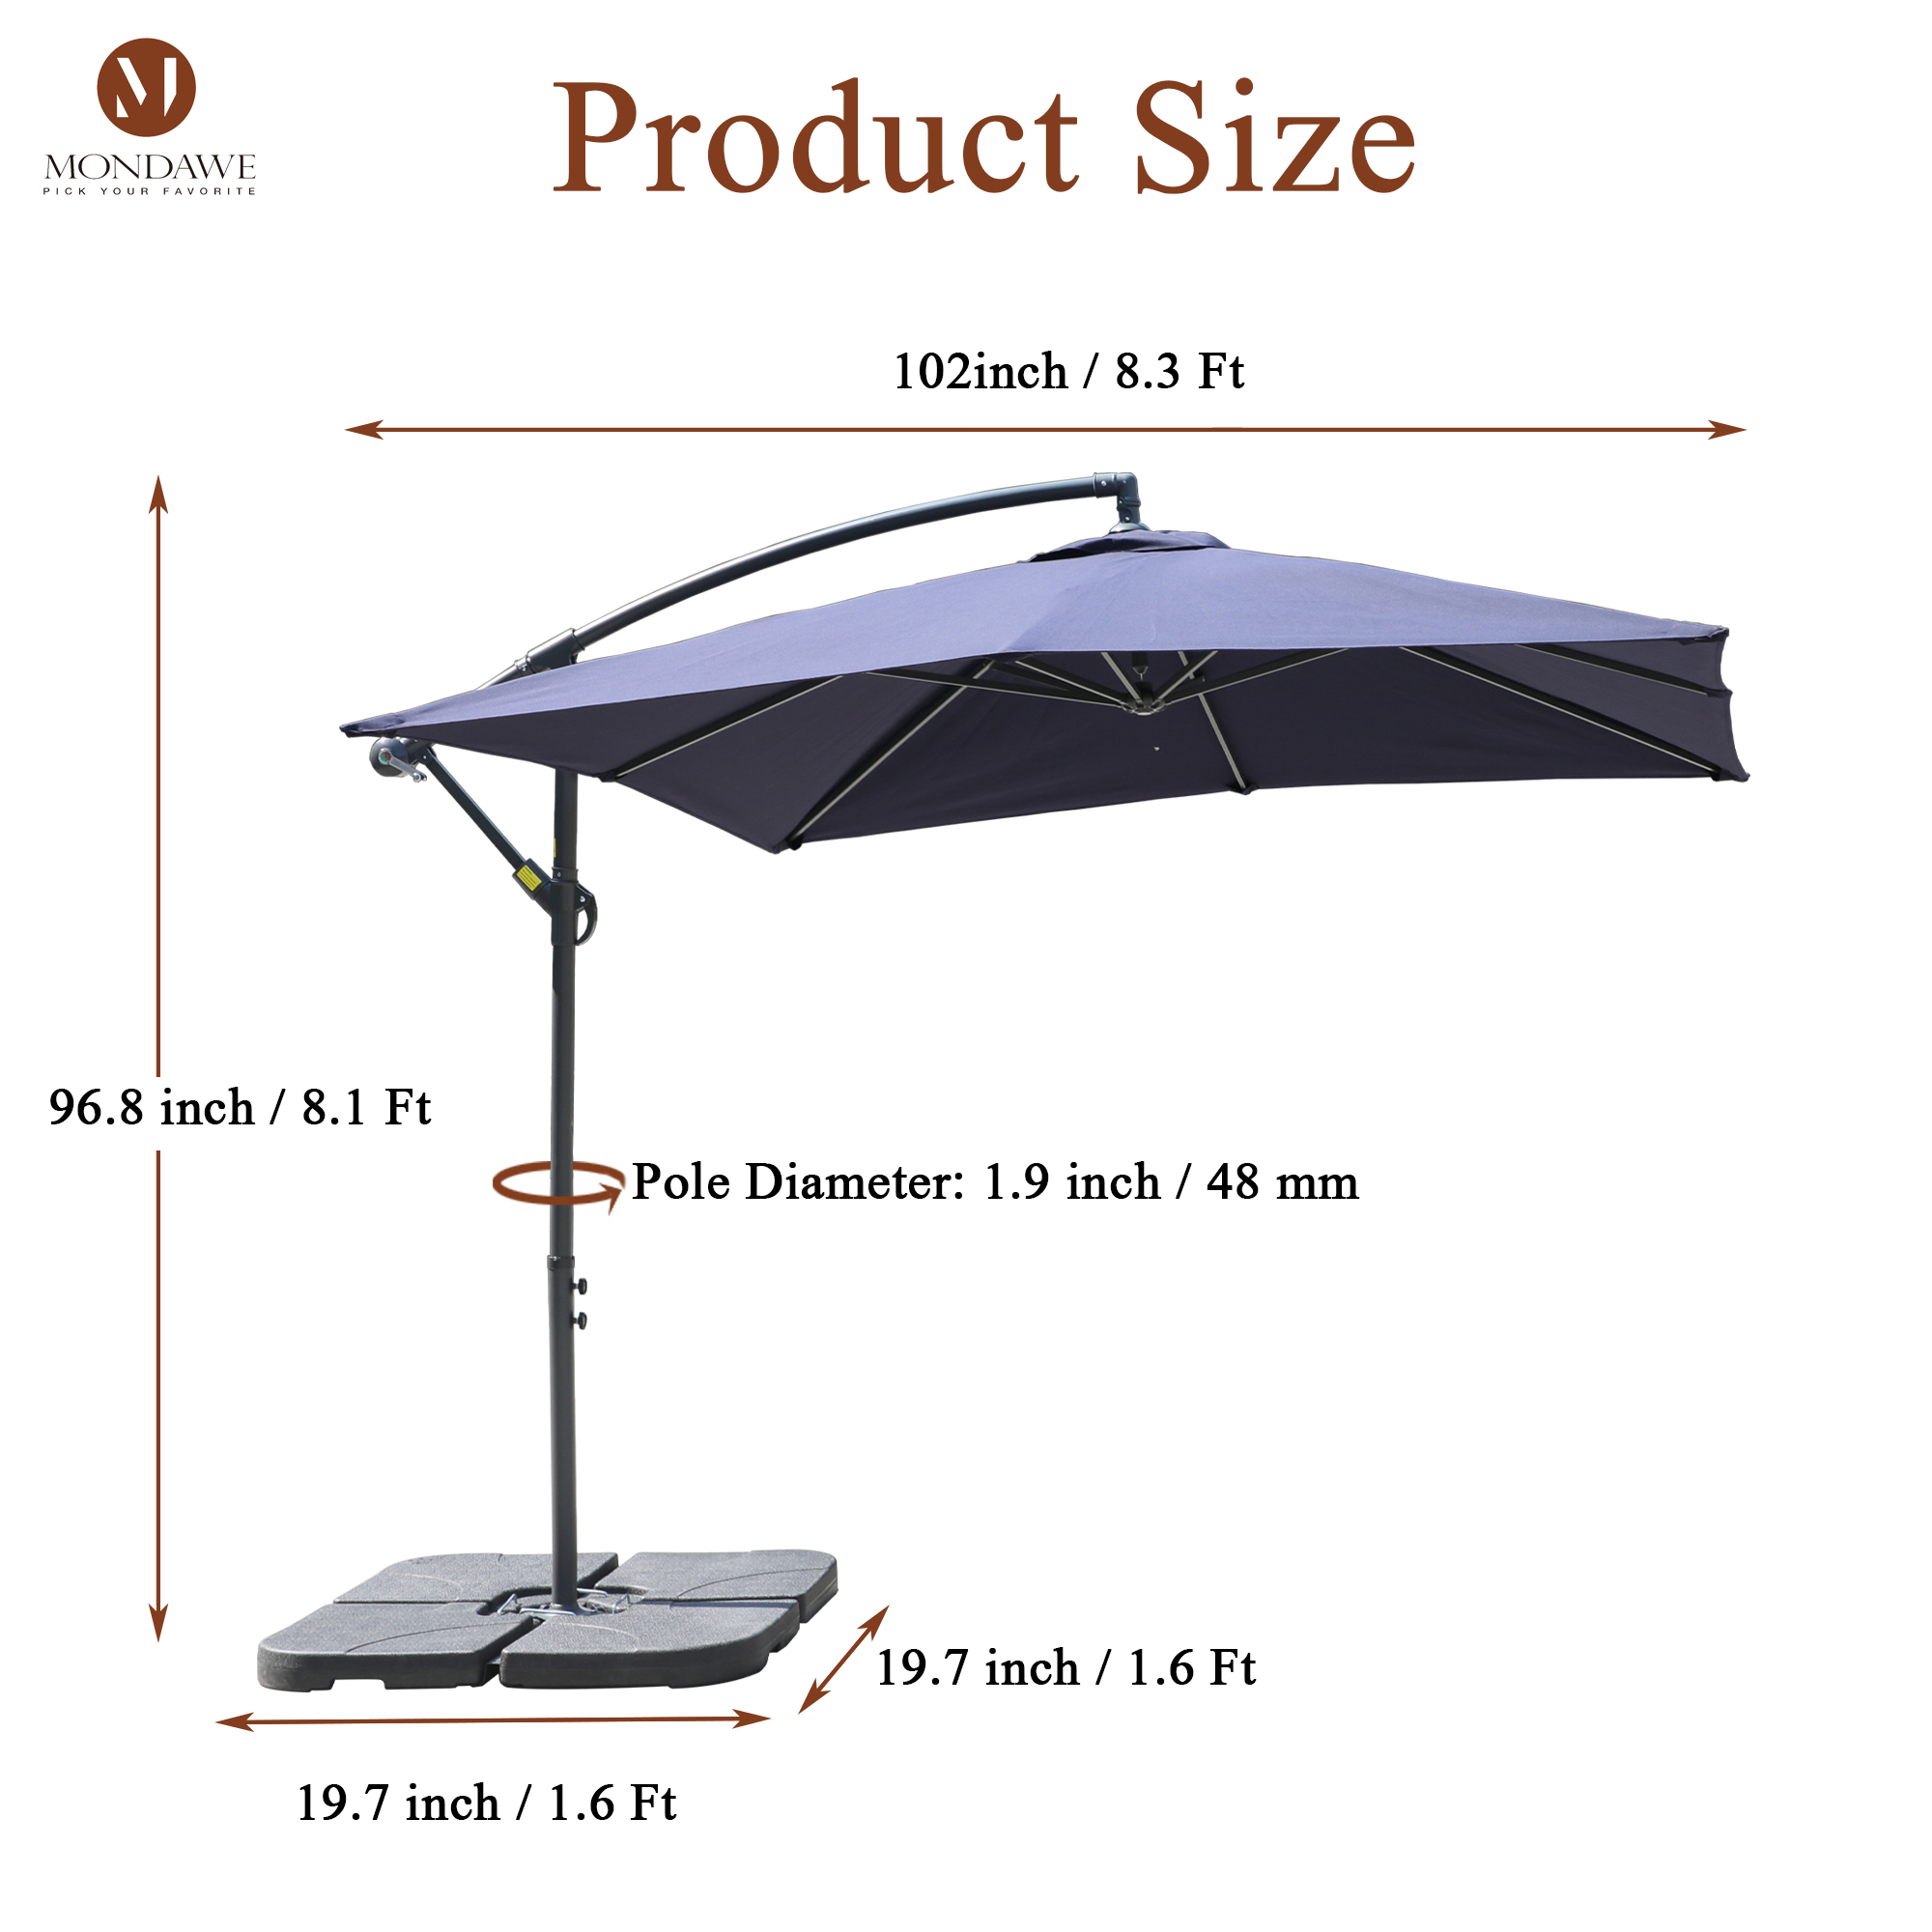 Mondawe 8.5Ft Square Outdoor Market Cantilever Patio Umbrella with Push Button Tilt and Base-Mondawe